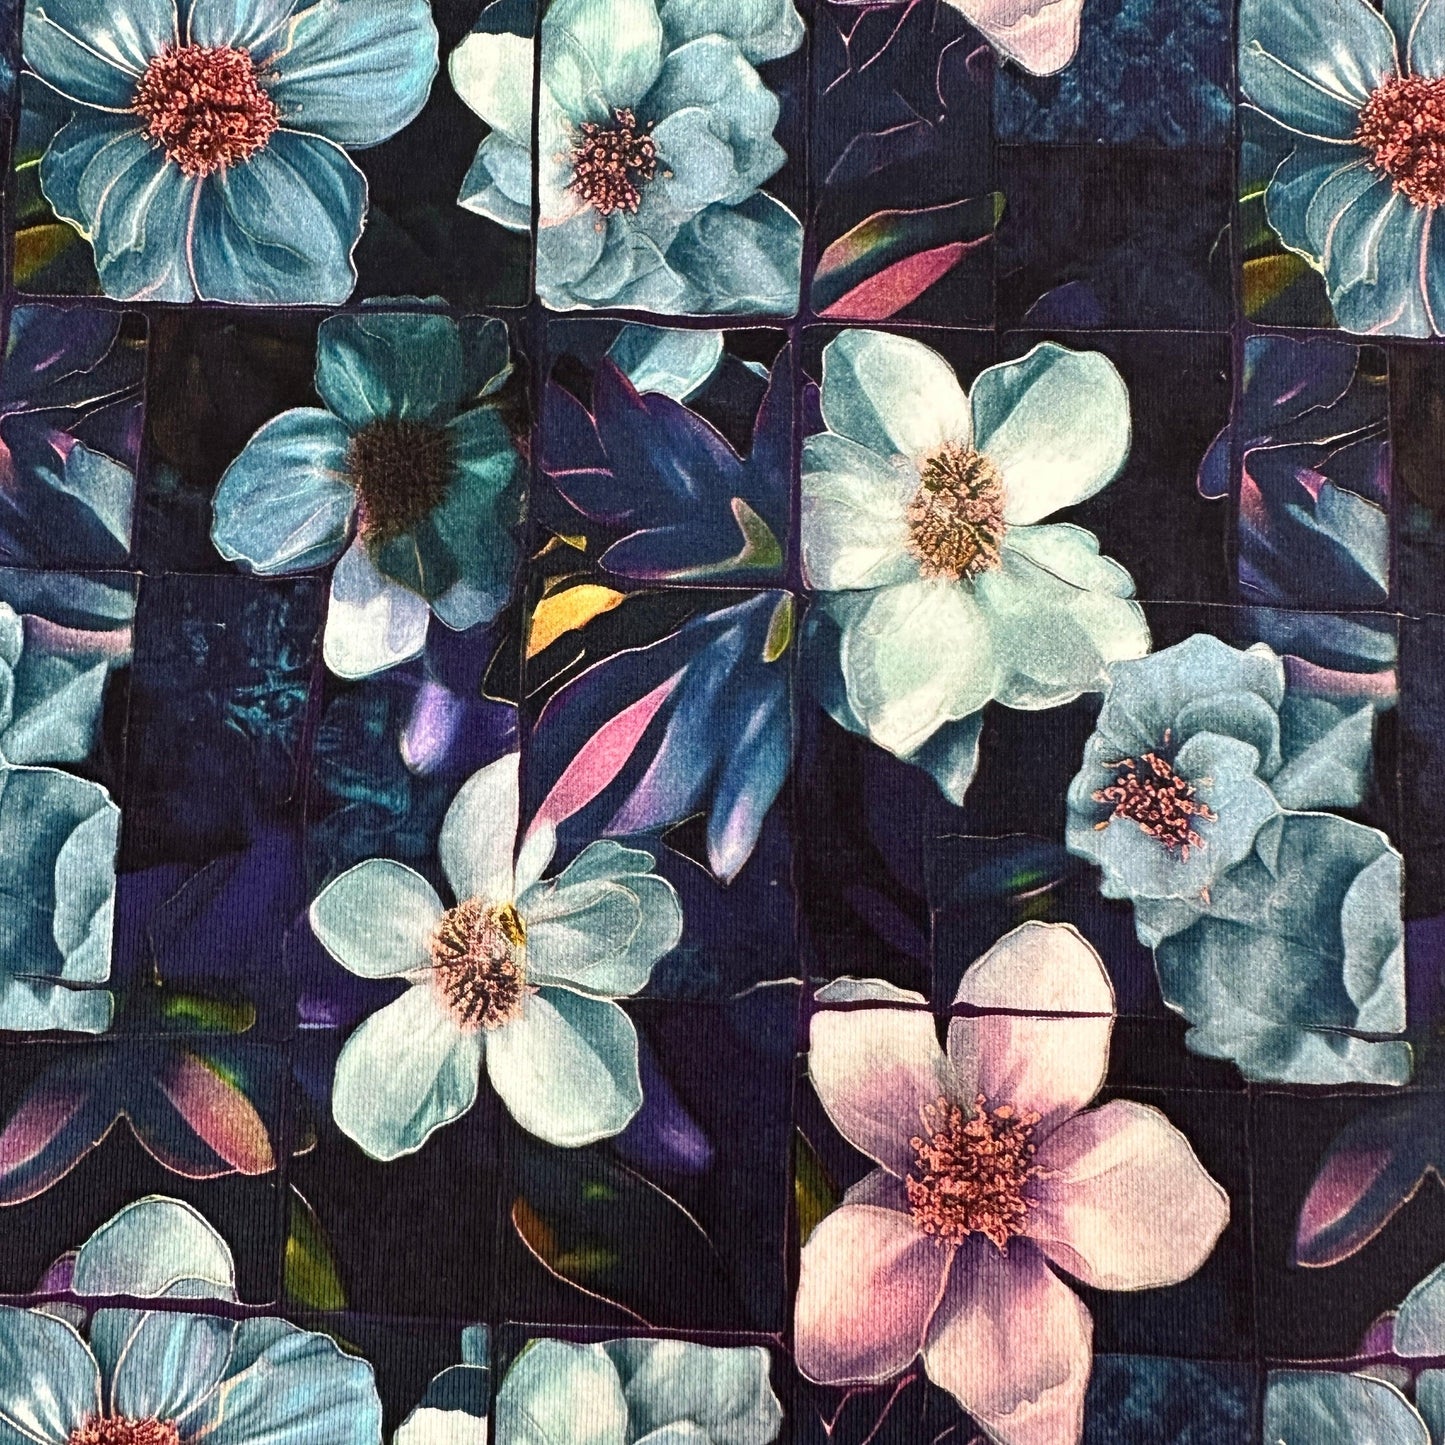 Stained Glass Dogwood Flowers on Organic Cotton/Spandex Jersey Fabric - Nature's Fabrics